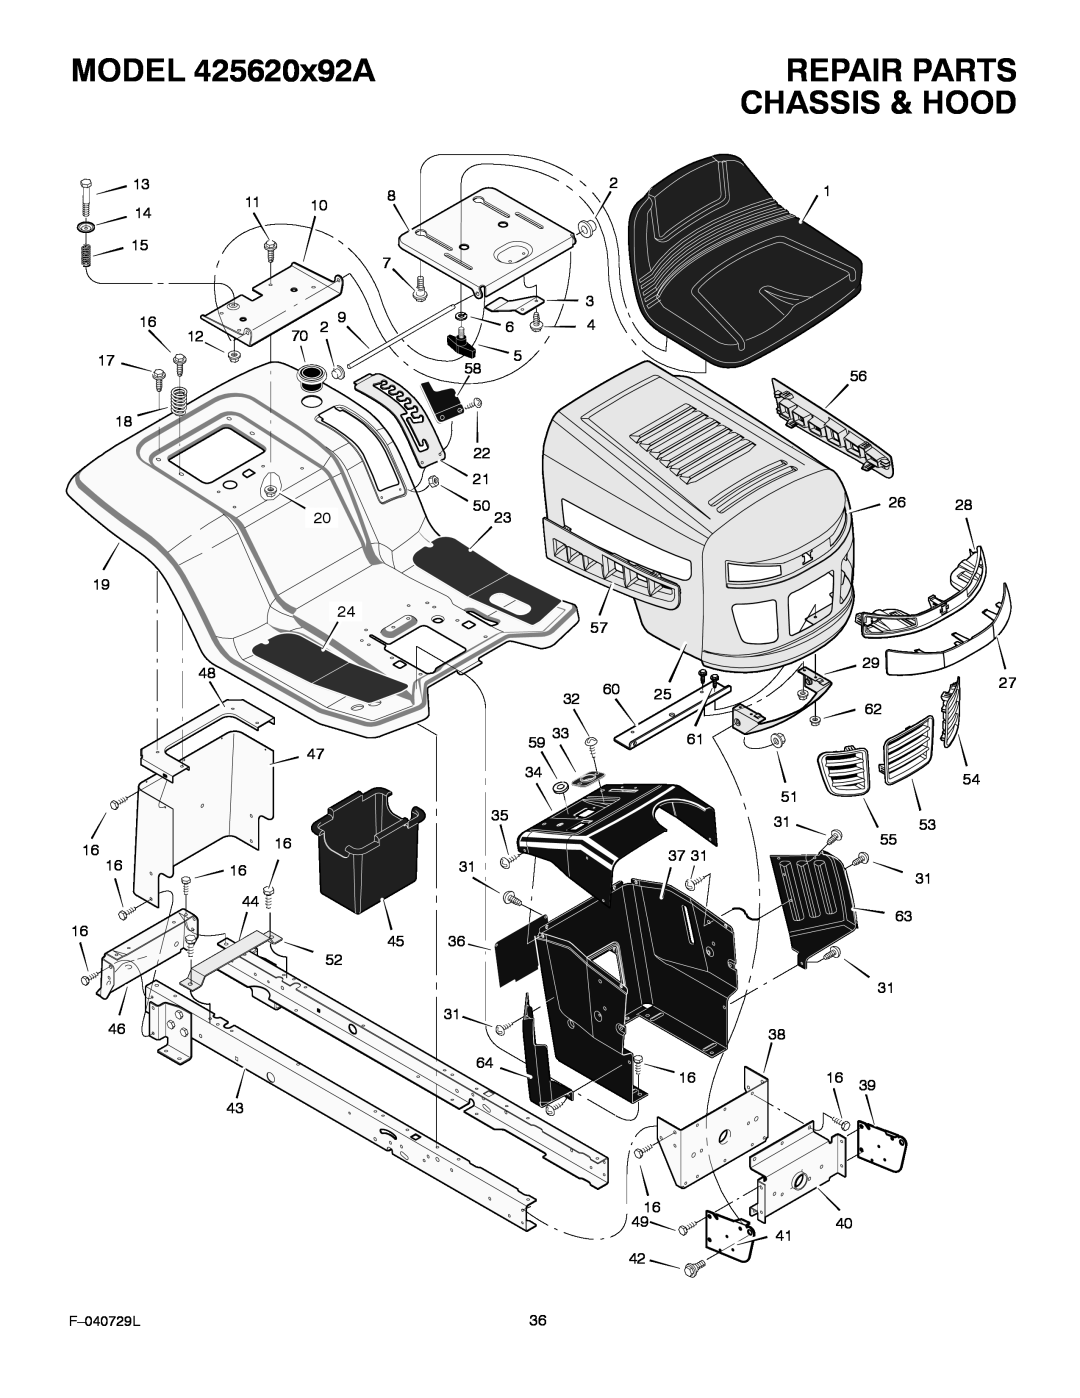 Murray manual MODEL 425620x92A, Repair Parts, Chassis & Hood, F-040729L 